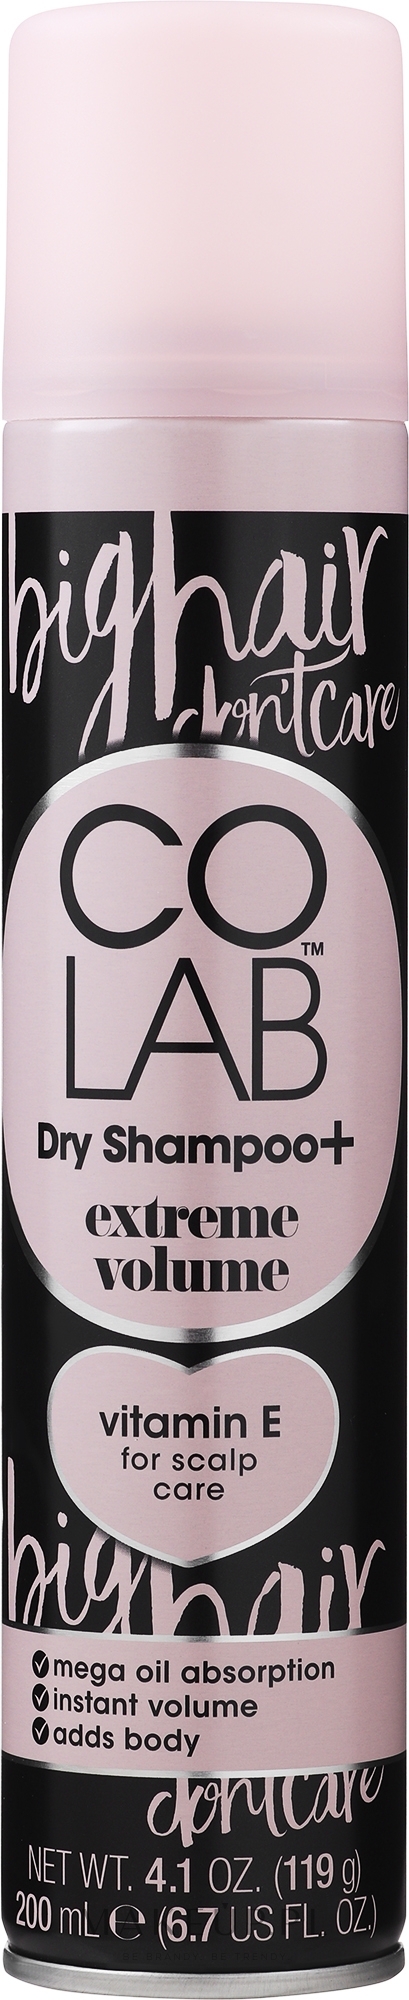 colab suchy szampon który zapach